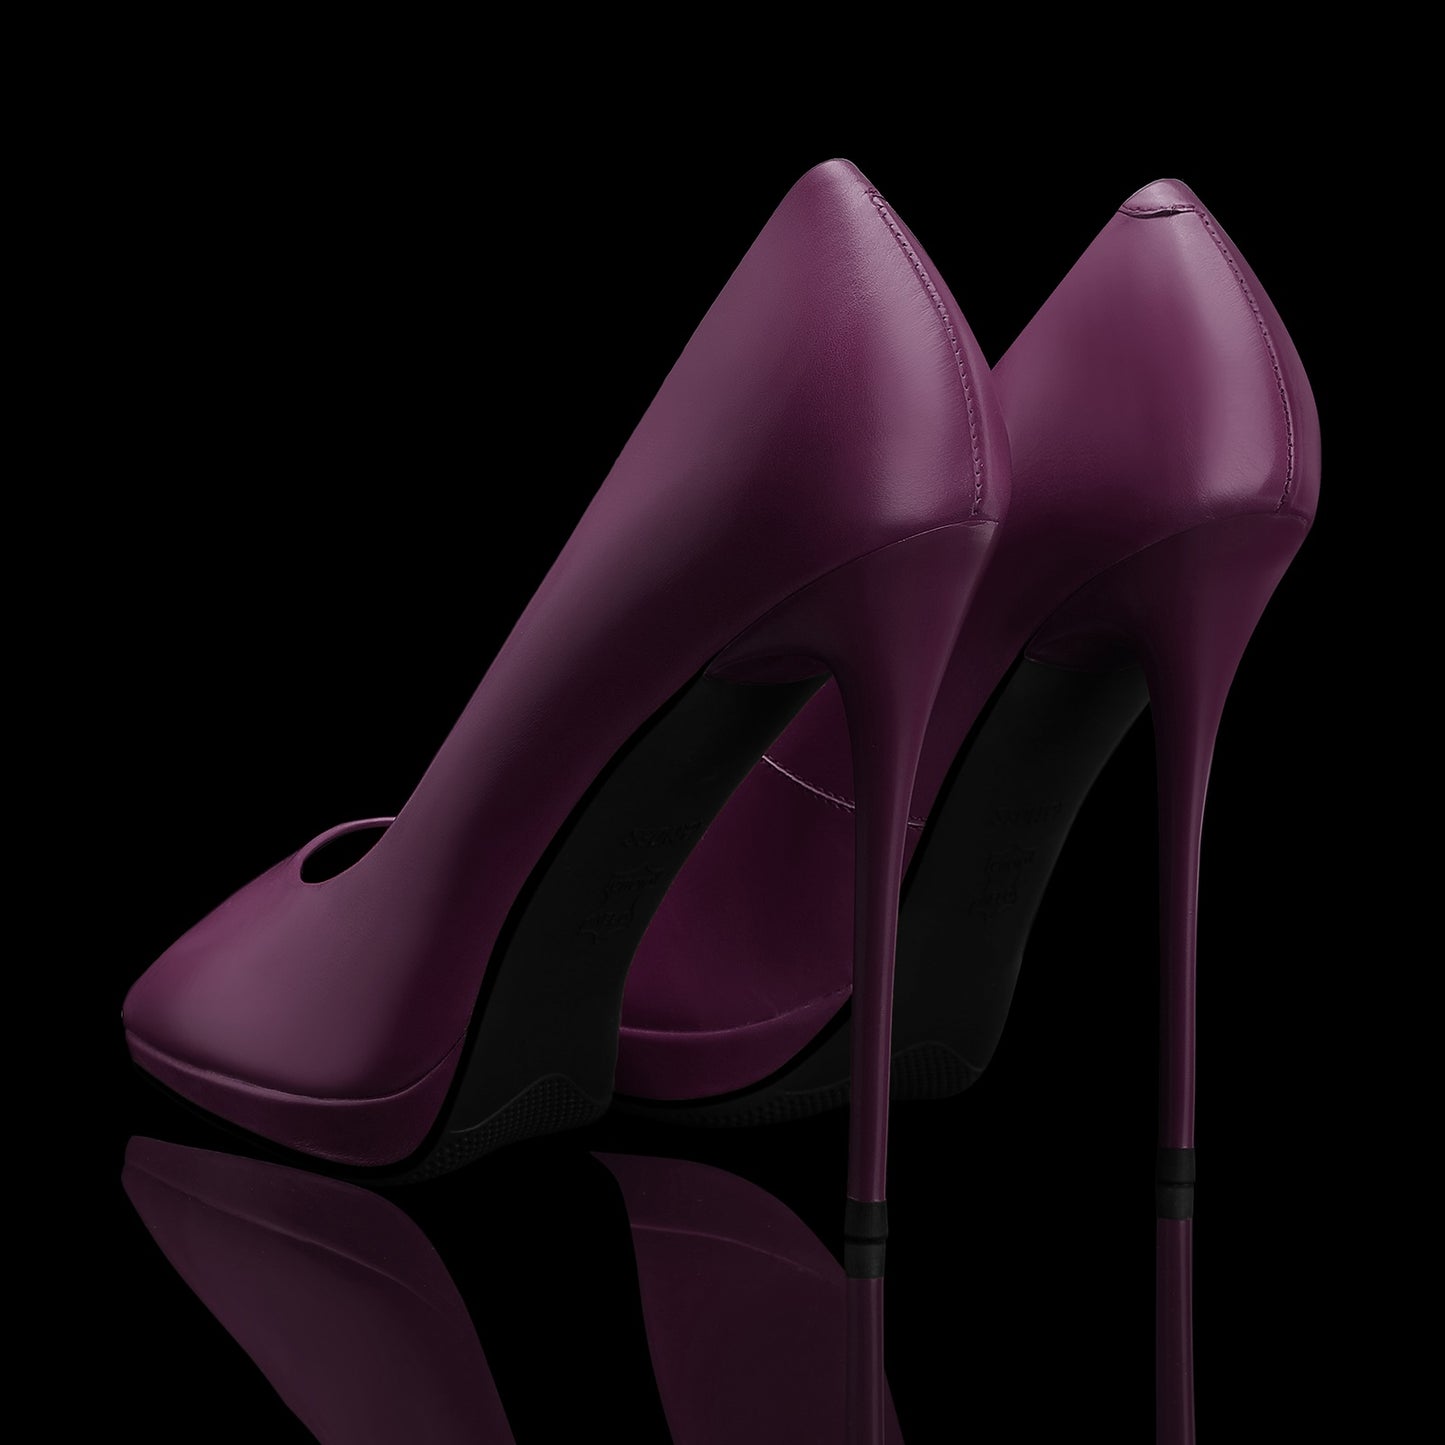 Platform Women's Leather High Heels: Dressy, Casual & Business